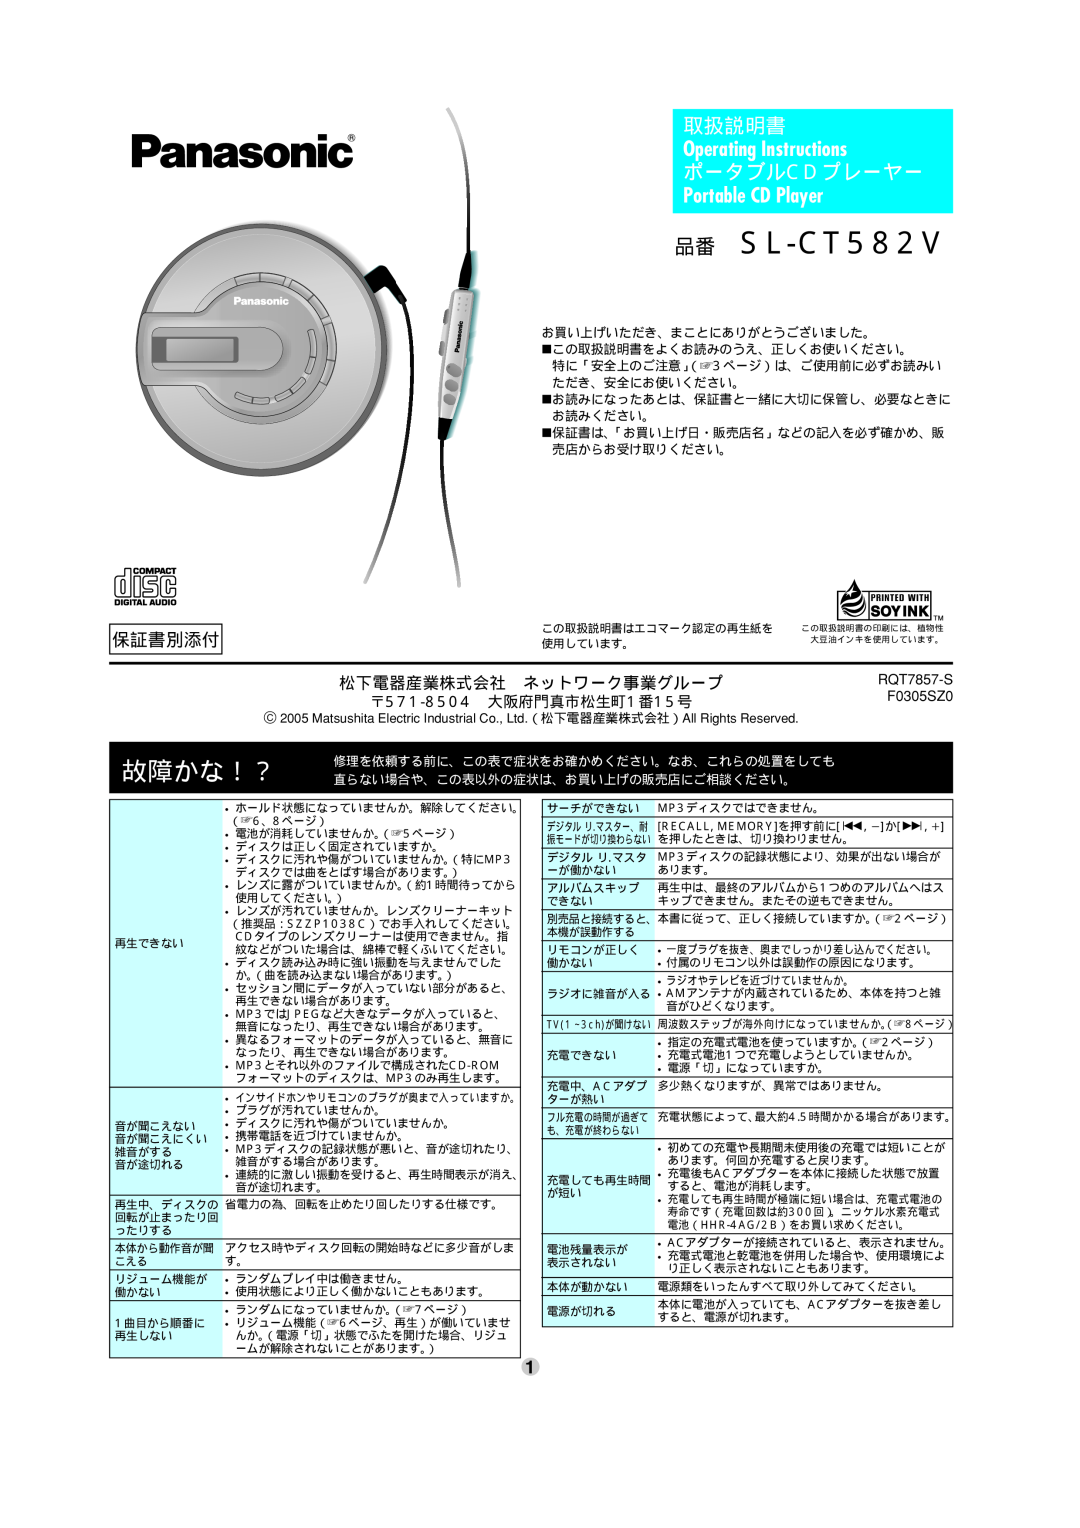 Panasonic SL-CT680V manual Portable CD Player, SL-CT580V/SL-CT582V, Model No, Operating Instructions, User memo 